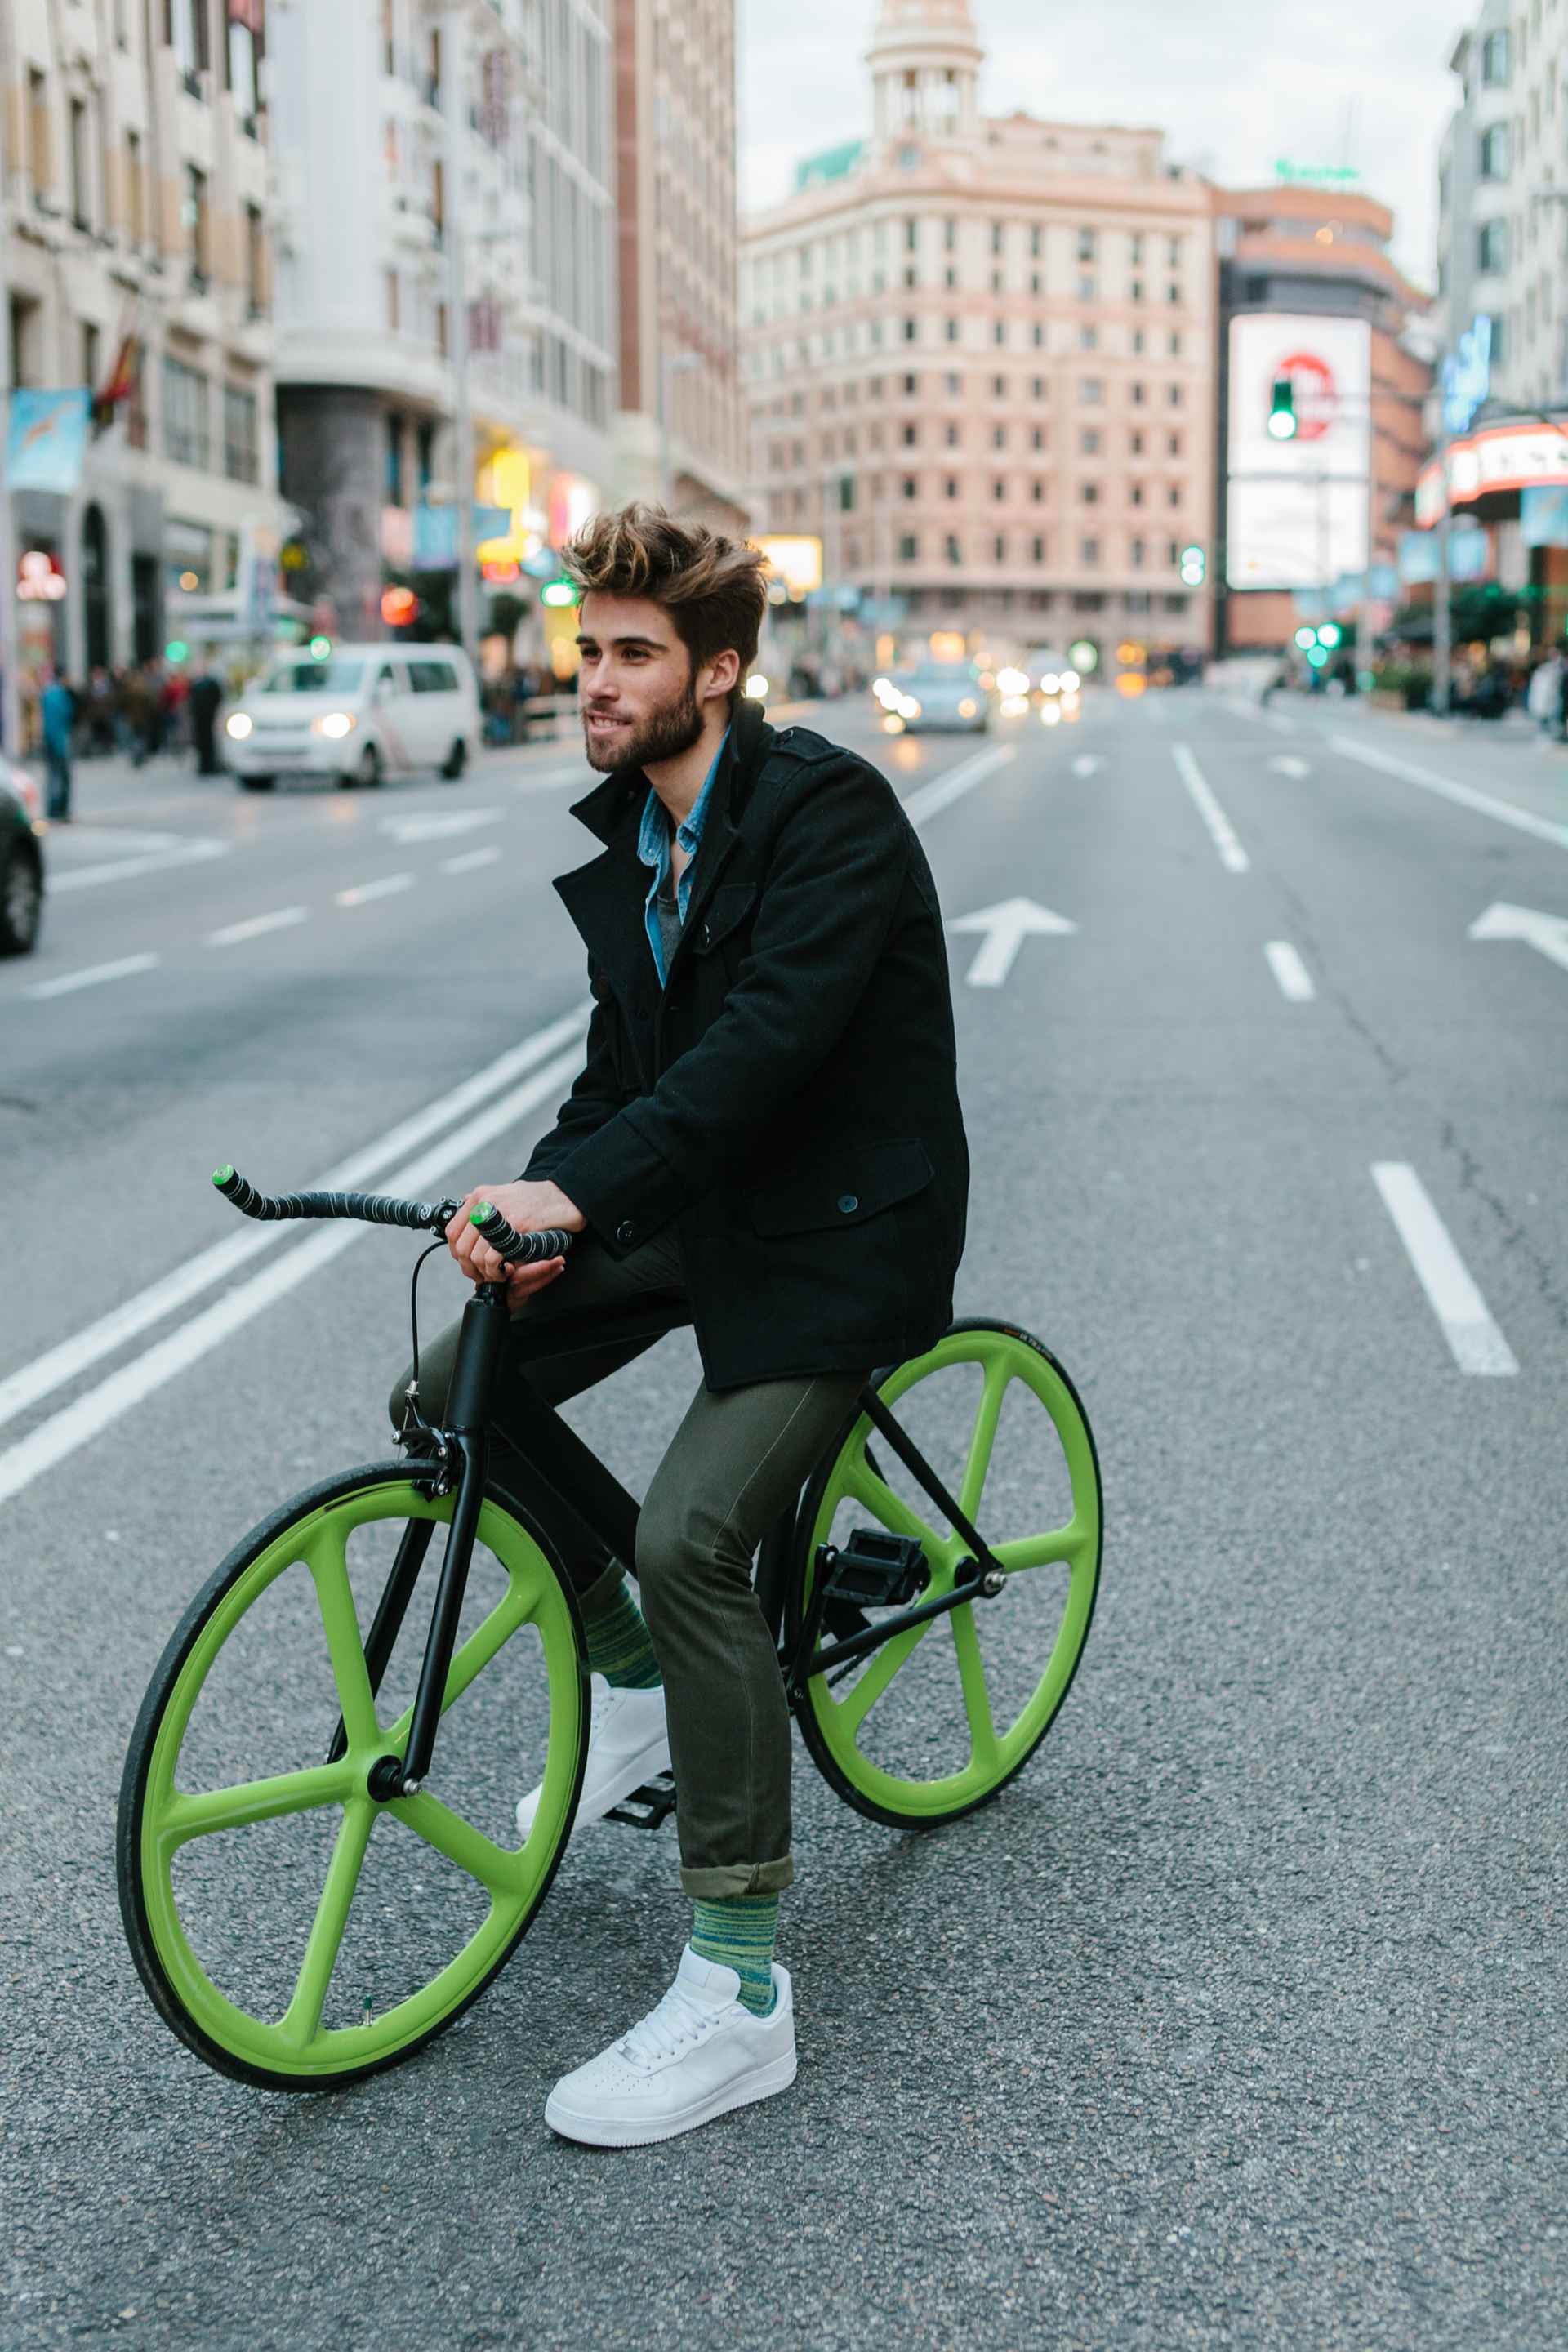 Man on a green bike ride through a city street.